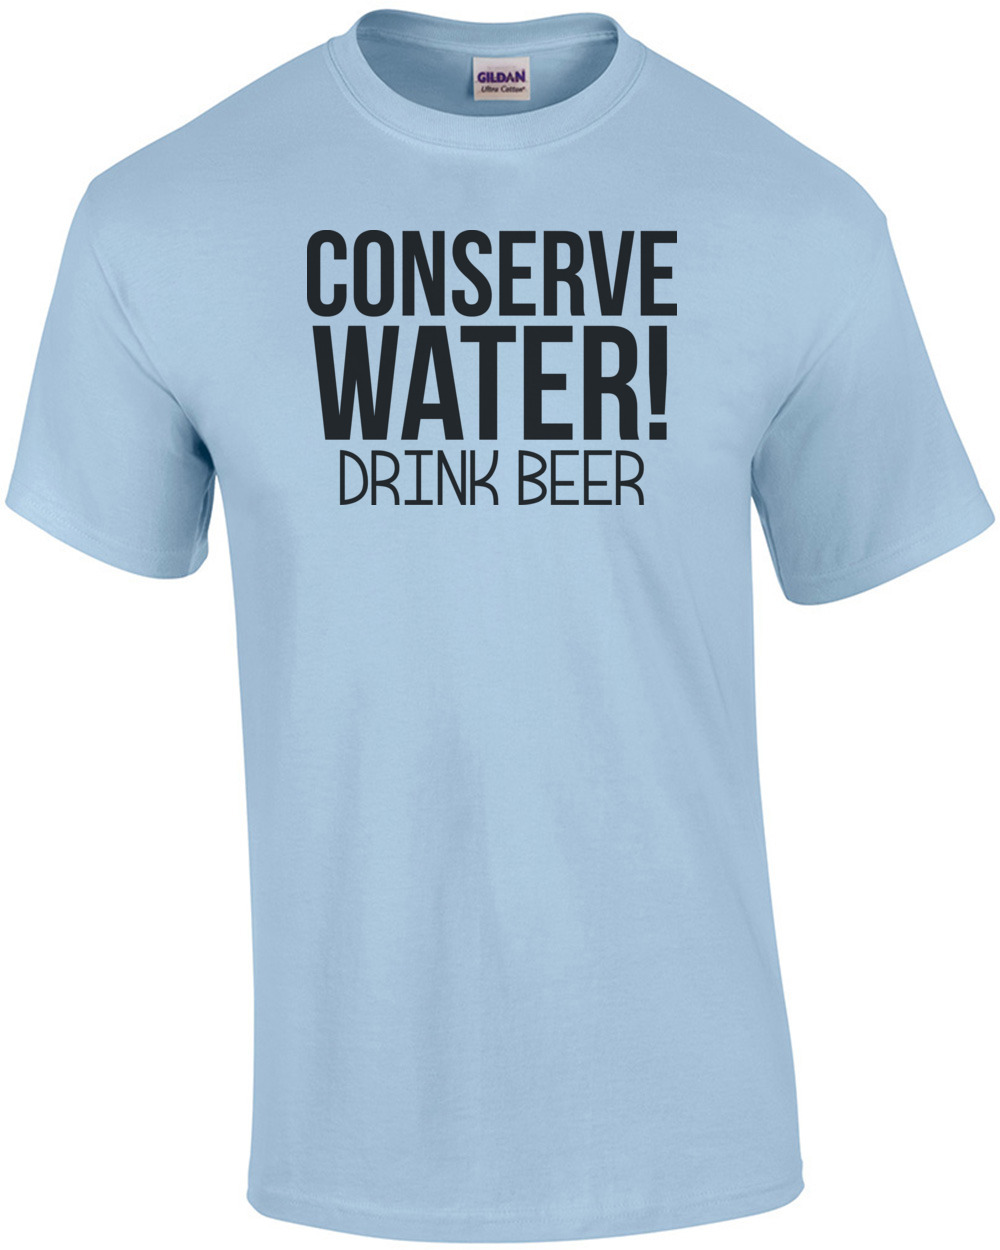 Conserve Water Drink Beer Shirt Ebay 